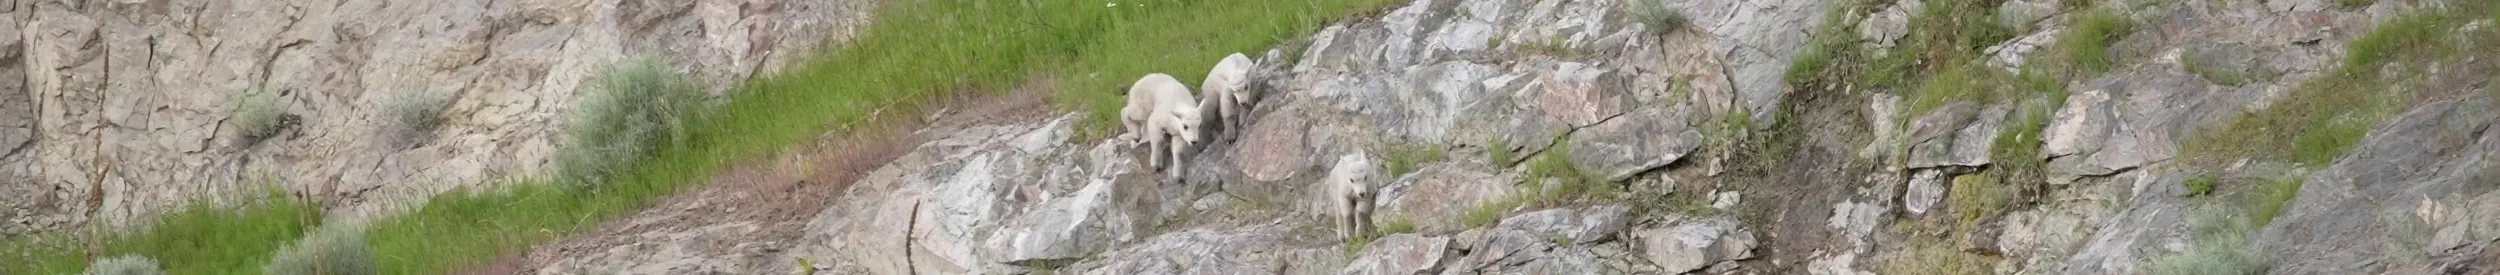 A trio of young mountain goats clamber across a rocky hillside